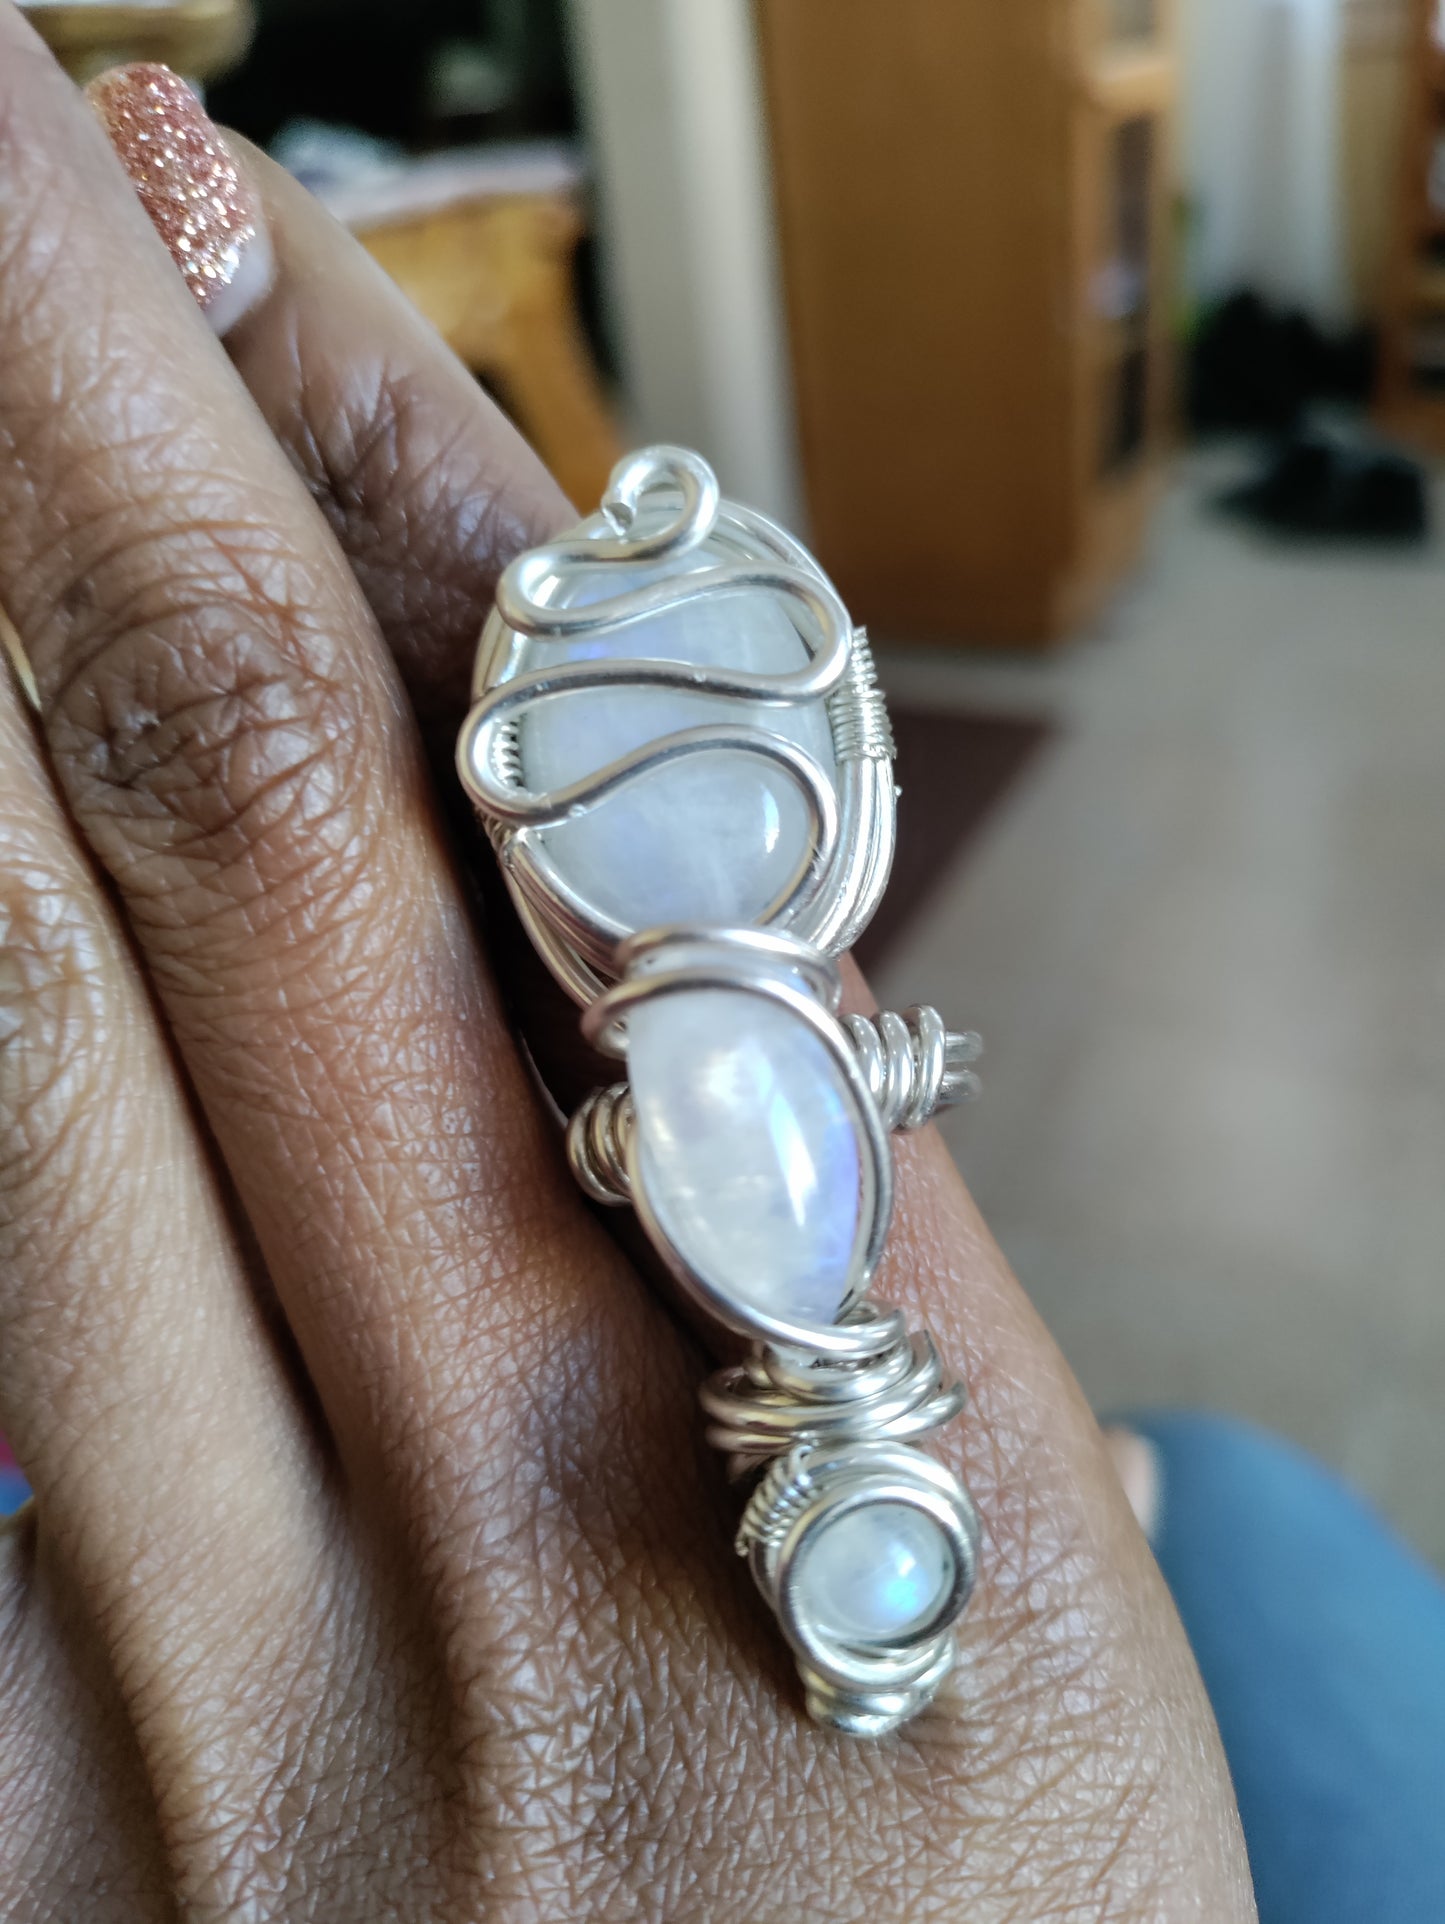 925 Sterling Silver Moon Goddess Ankh Ring